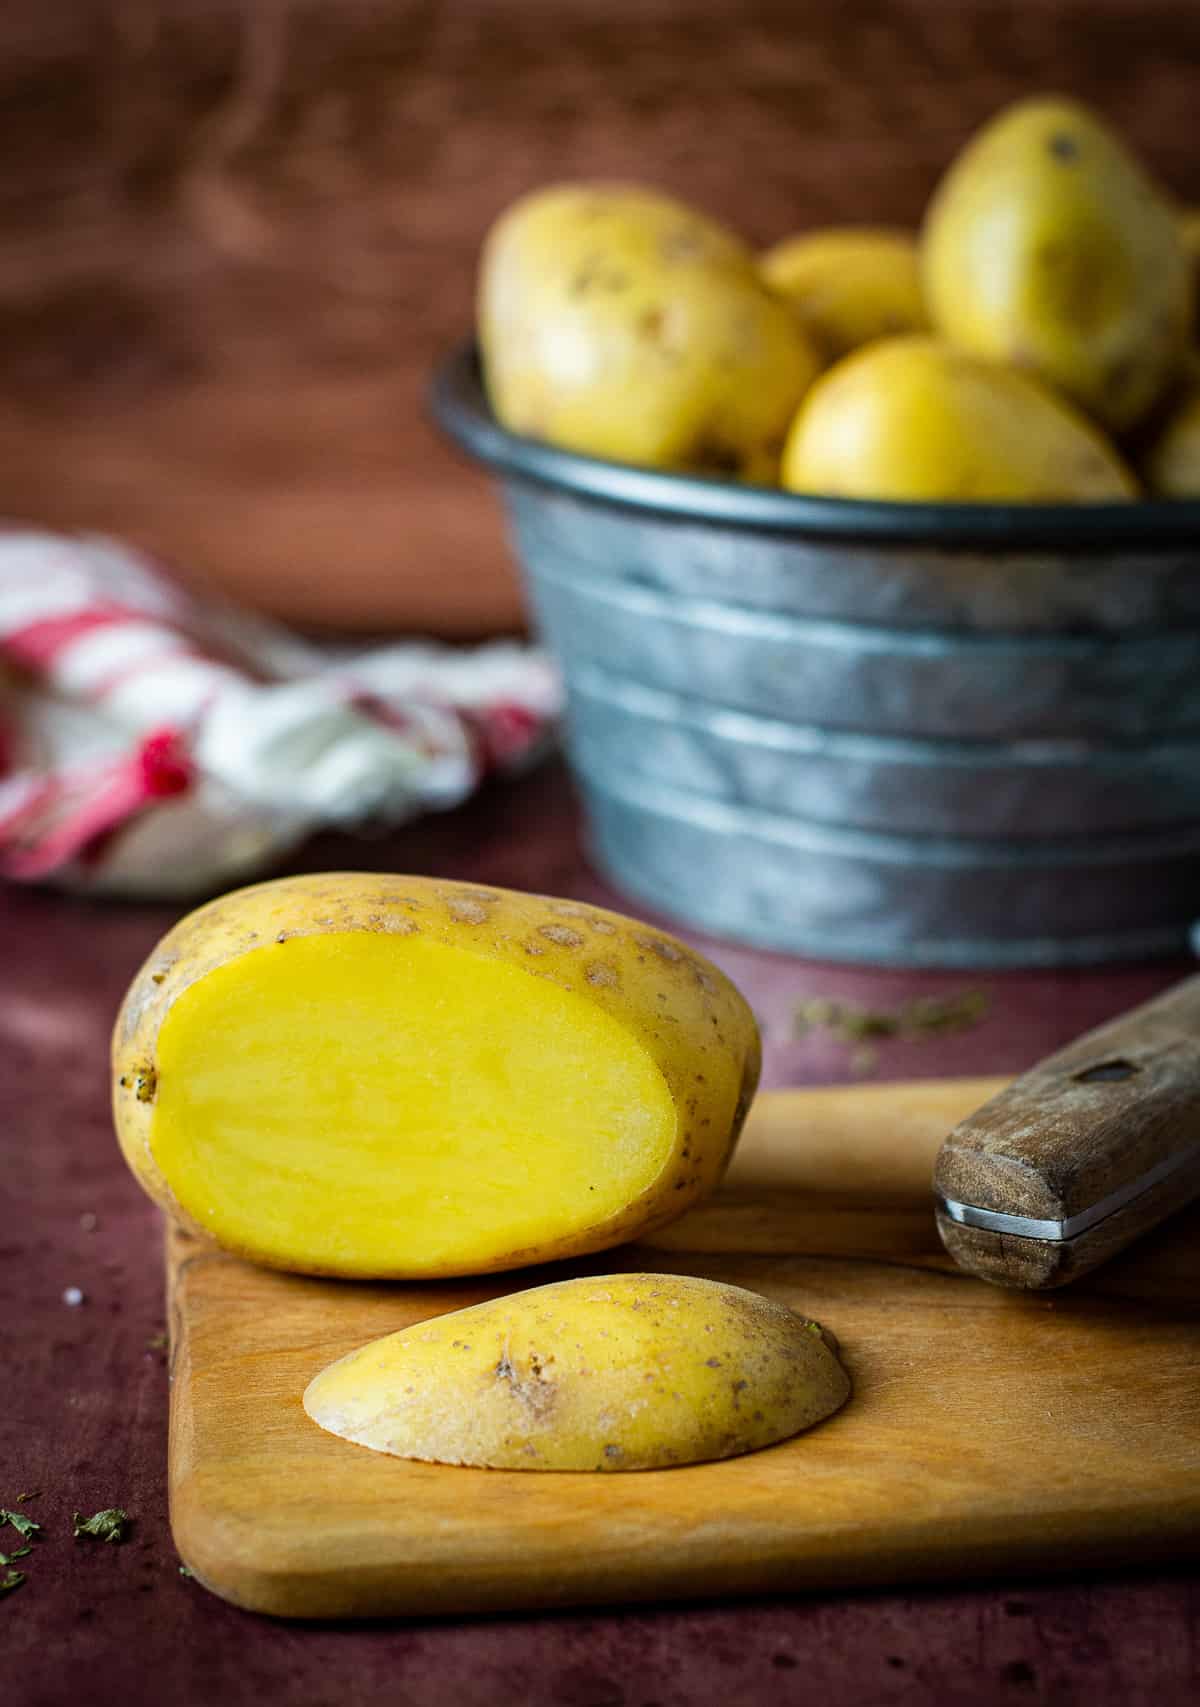 Potato with bottom sliced off.